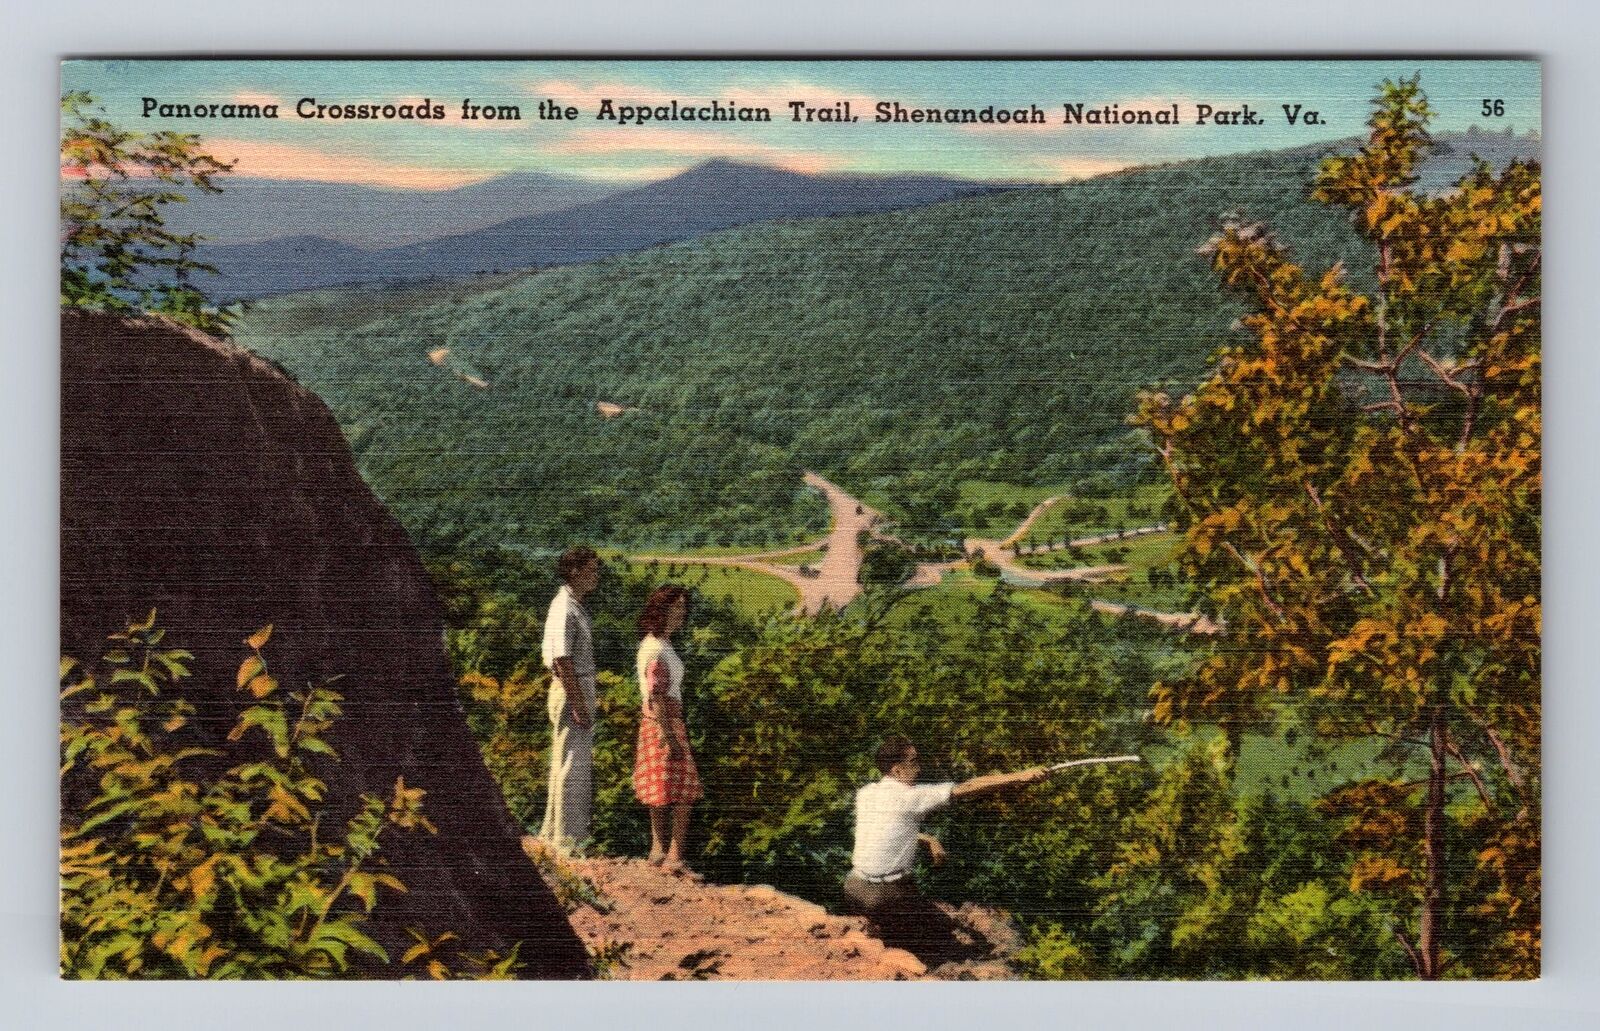 Shenandoah National Park, Panorama Crossroads Appalachian Trail Vintage Postcard